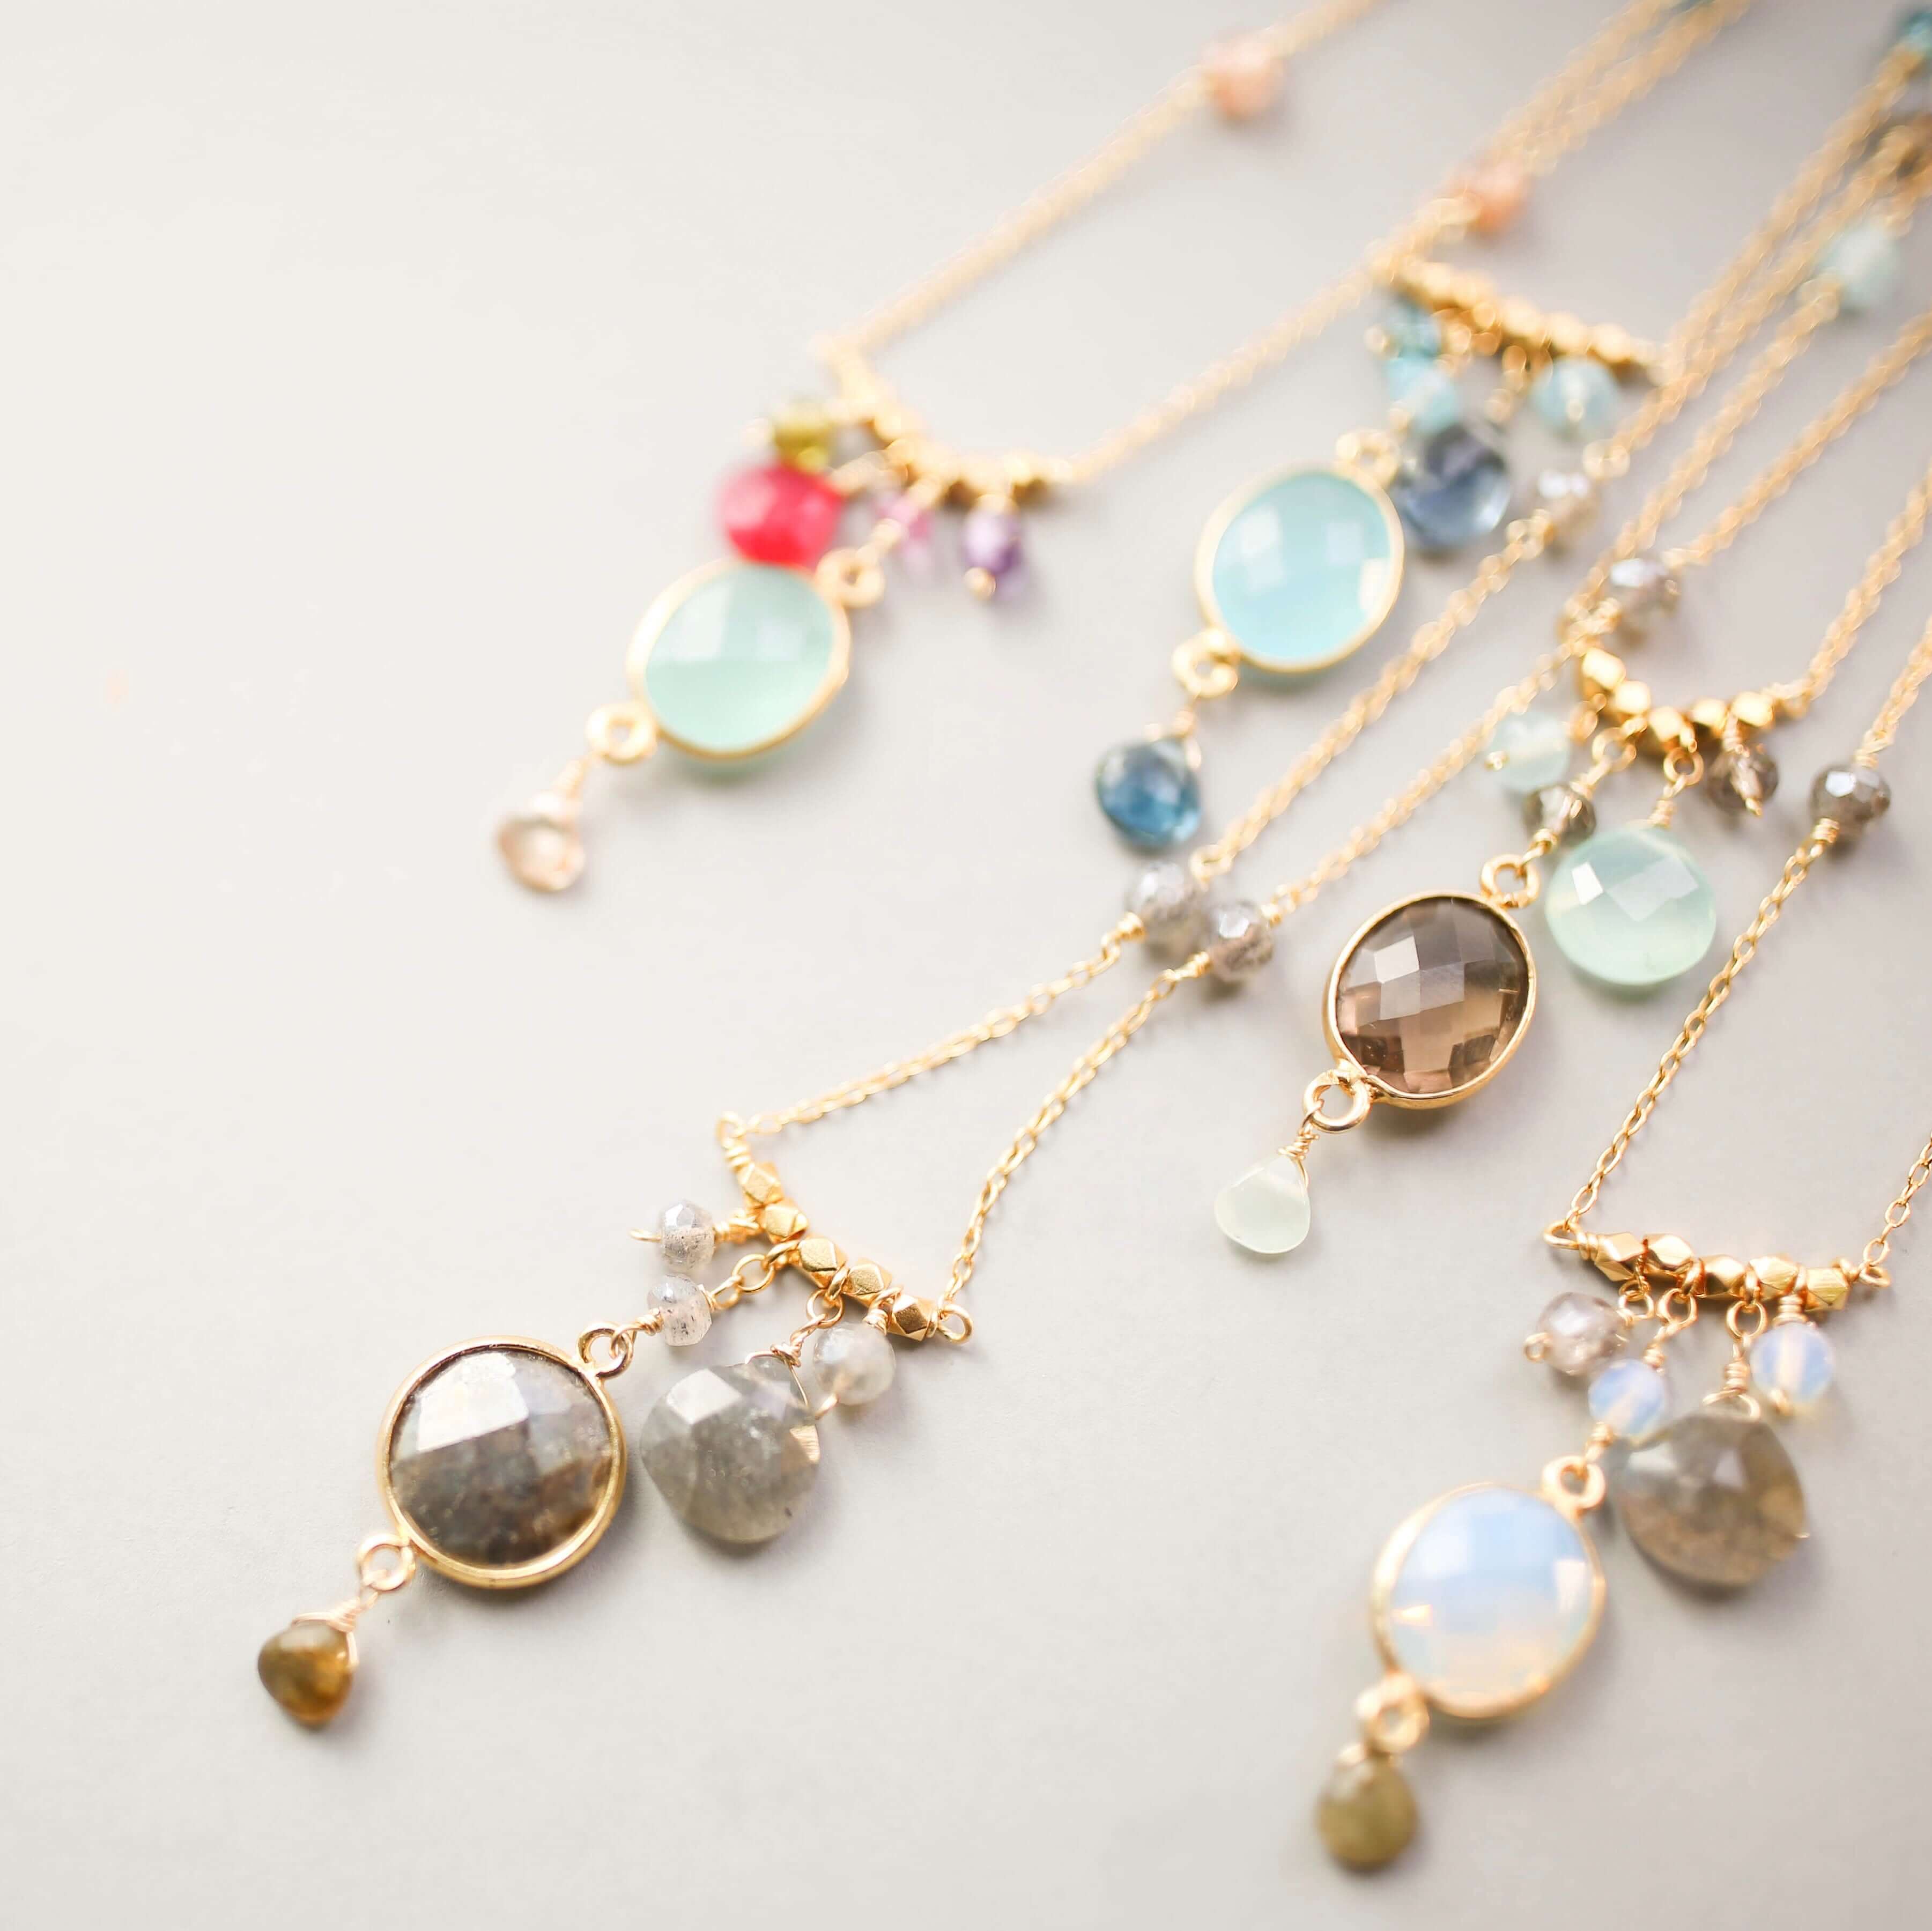 Elegant bezel-set  gemstones necklace with surrounding accents.